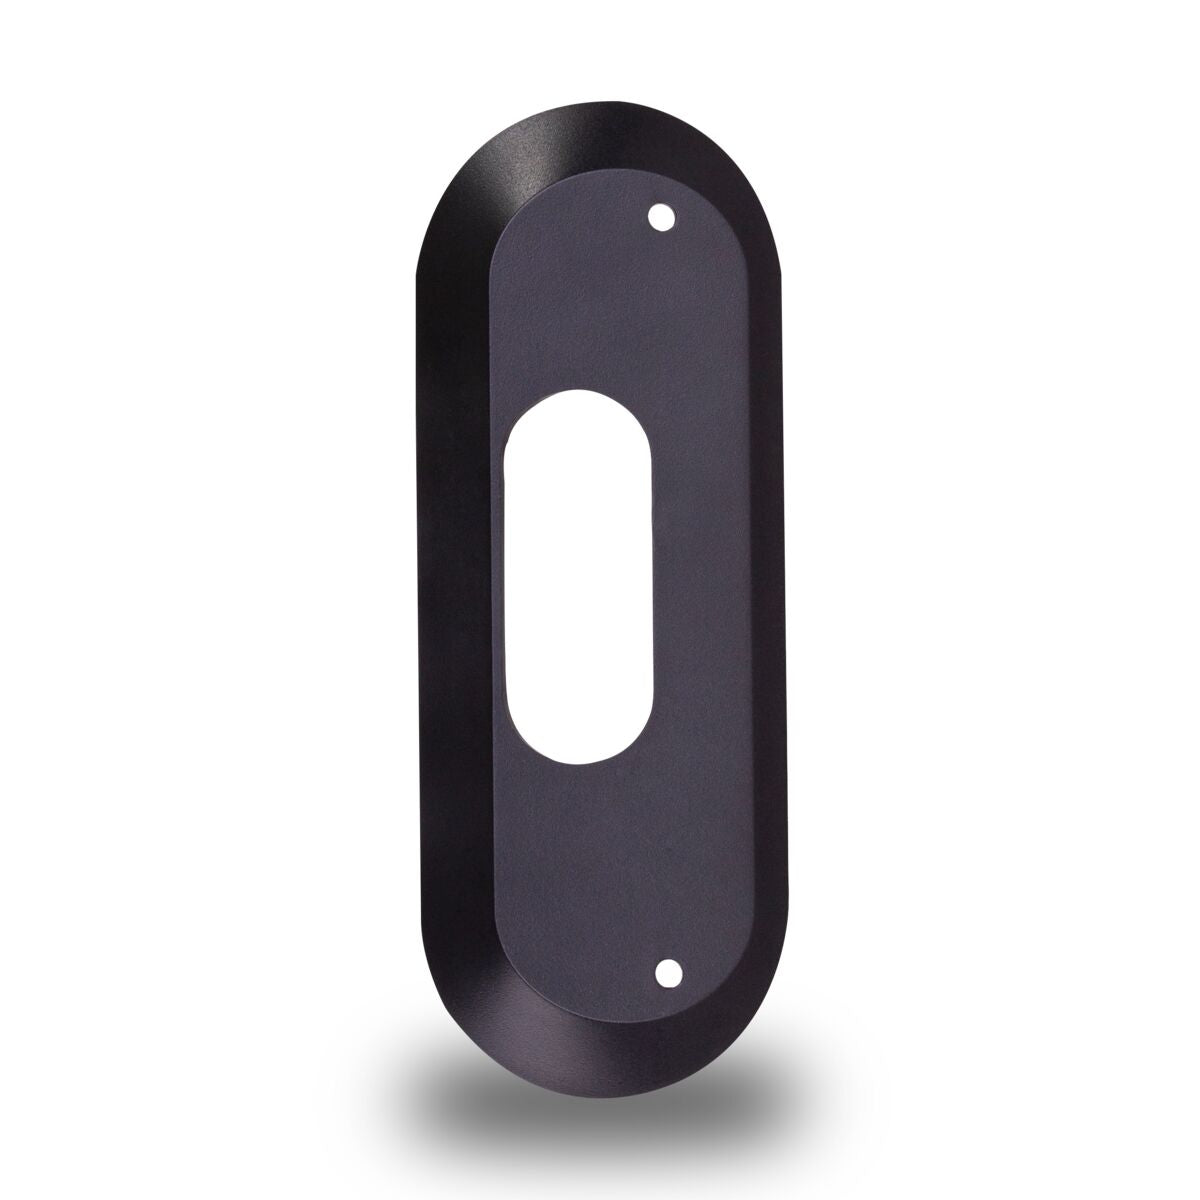 Buzz LO - Doorbell camera - Mounting Piece Front View Image | Marmitek